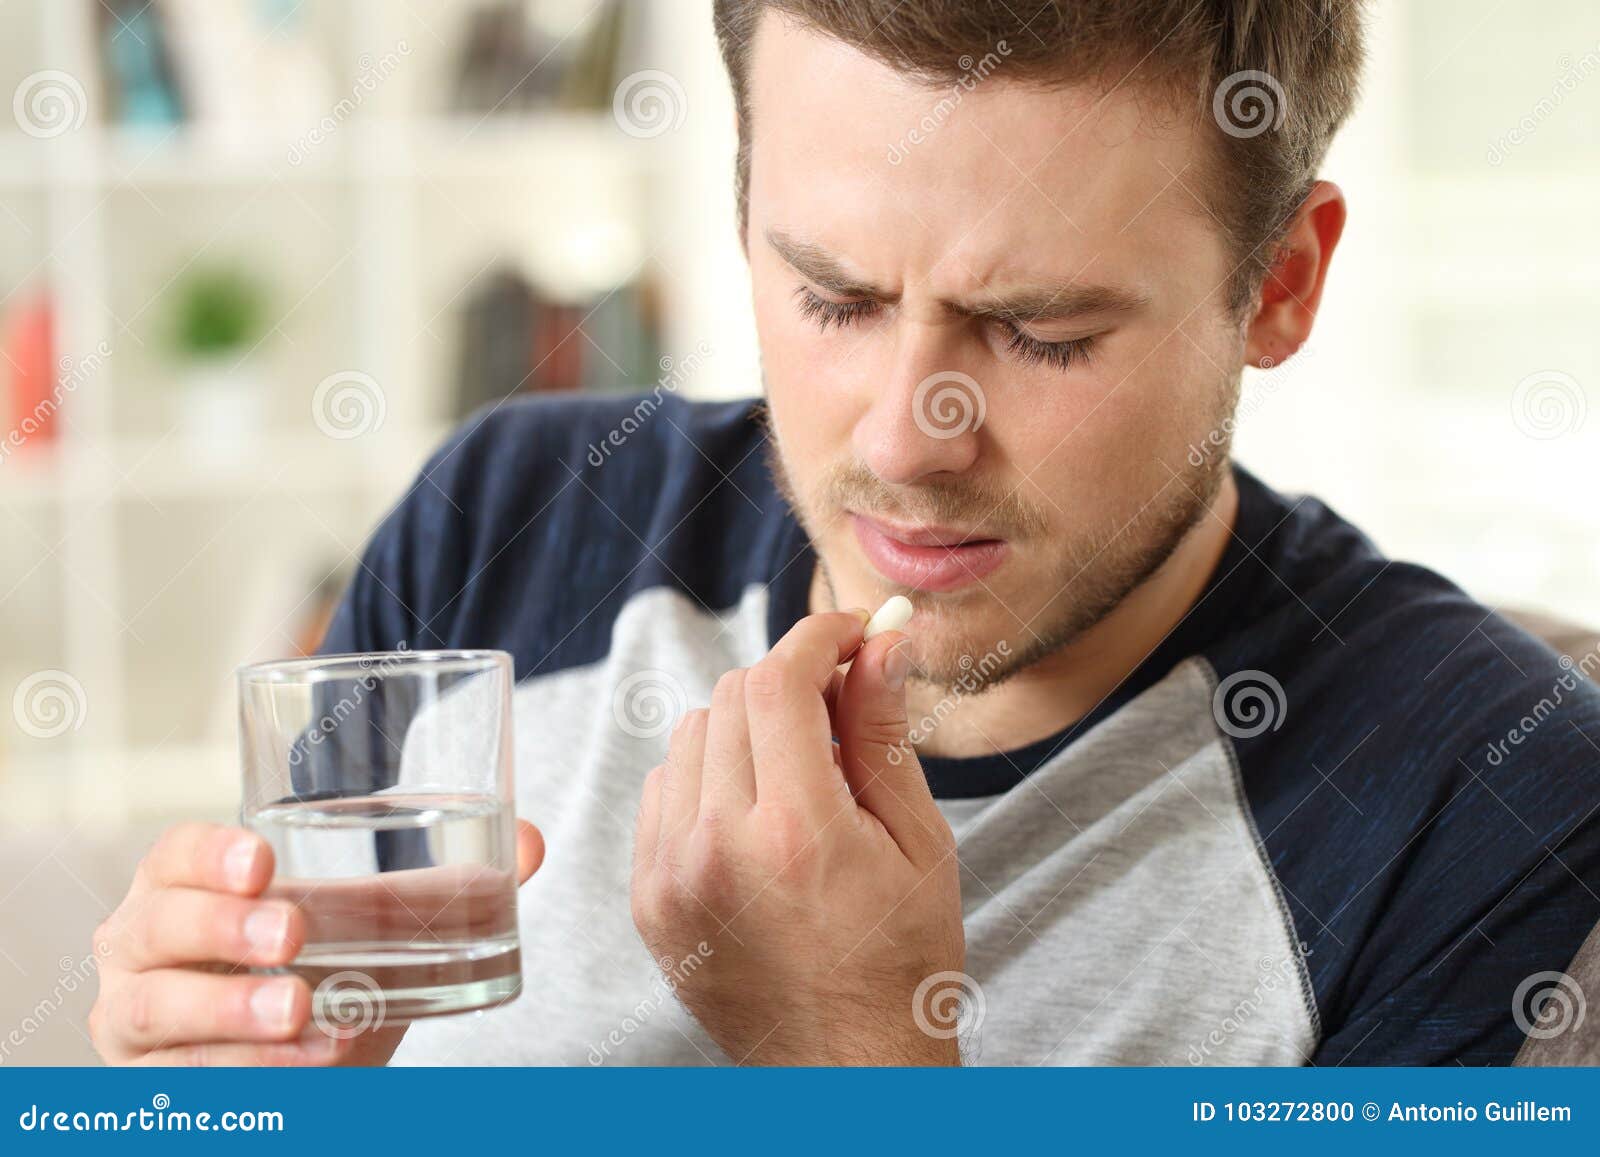 man suffering taking a pill